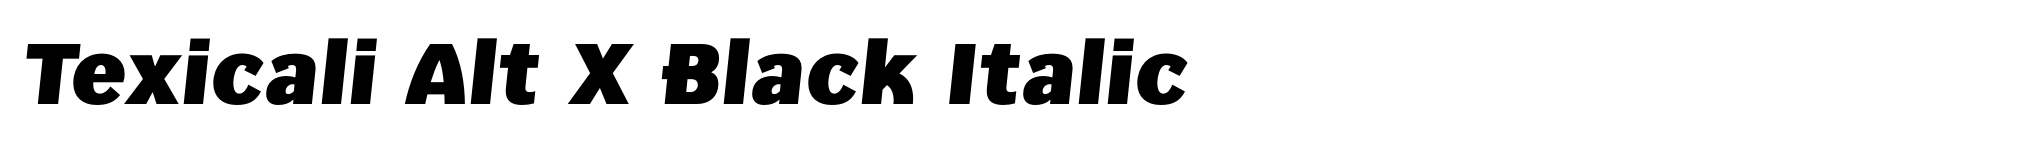 Texicali Alt X Black Italic image